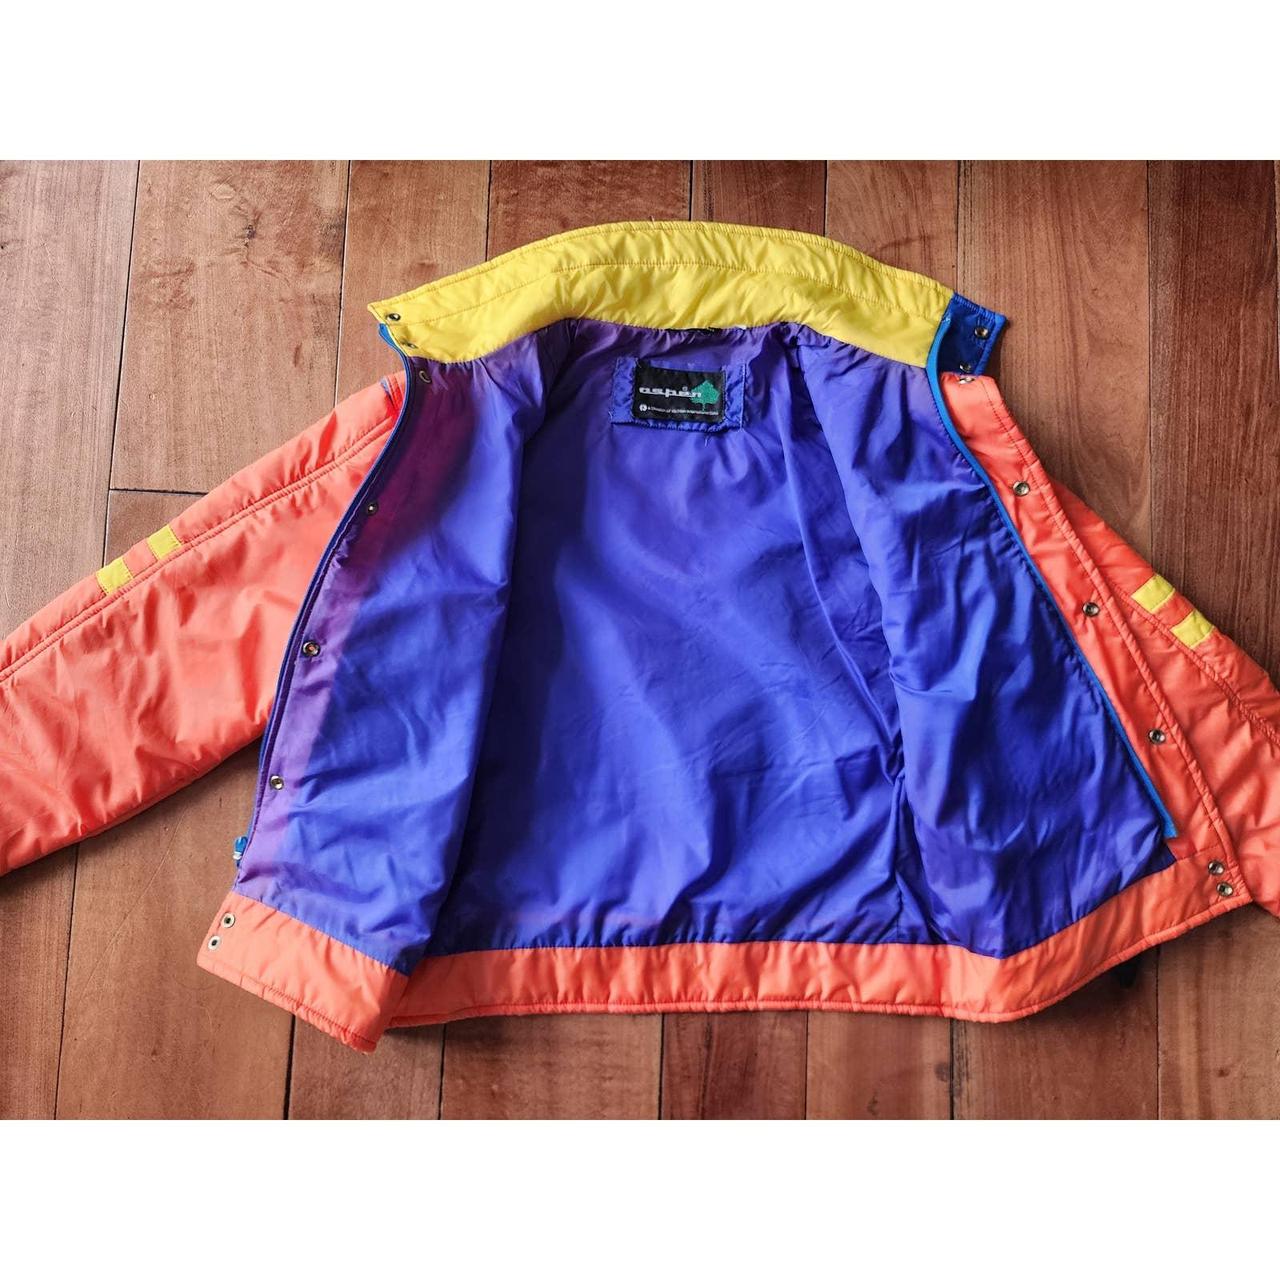 Super rad 1980's orange ski jacket, with yellow... - Depop